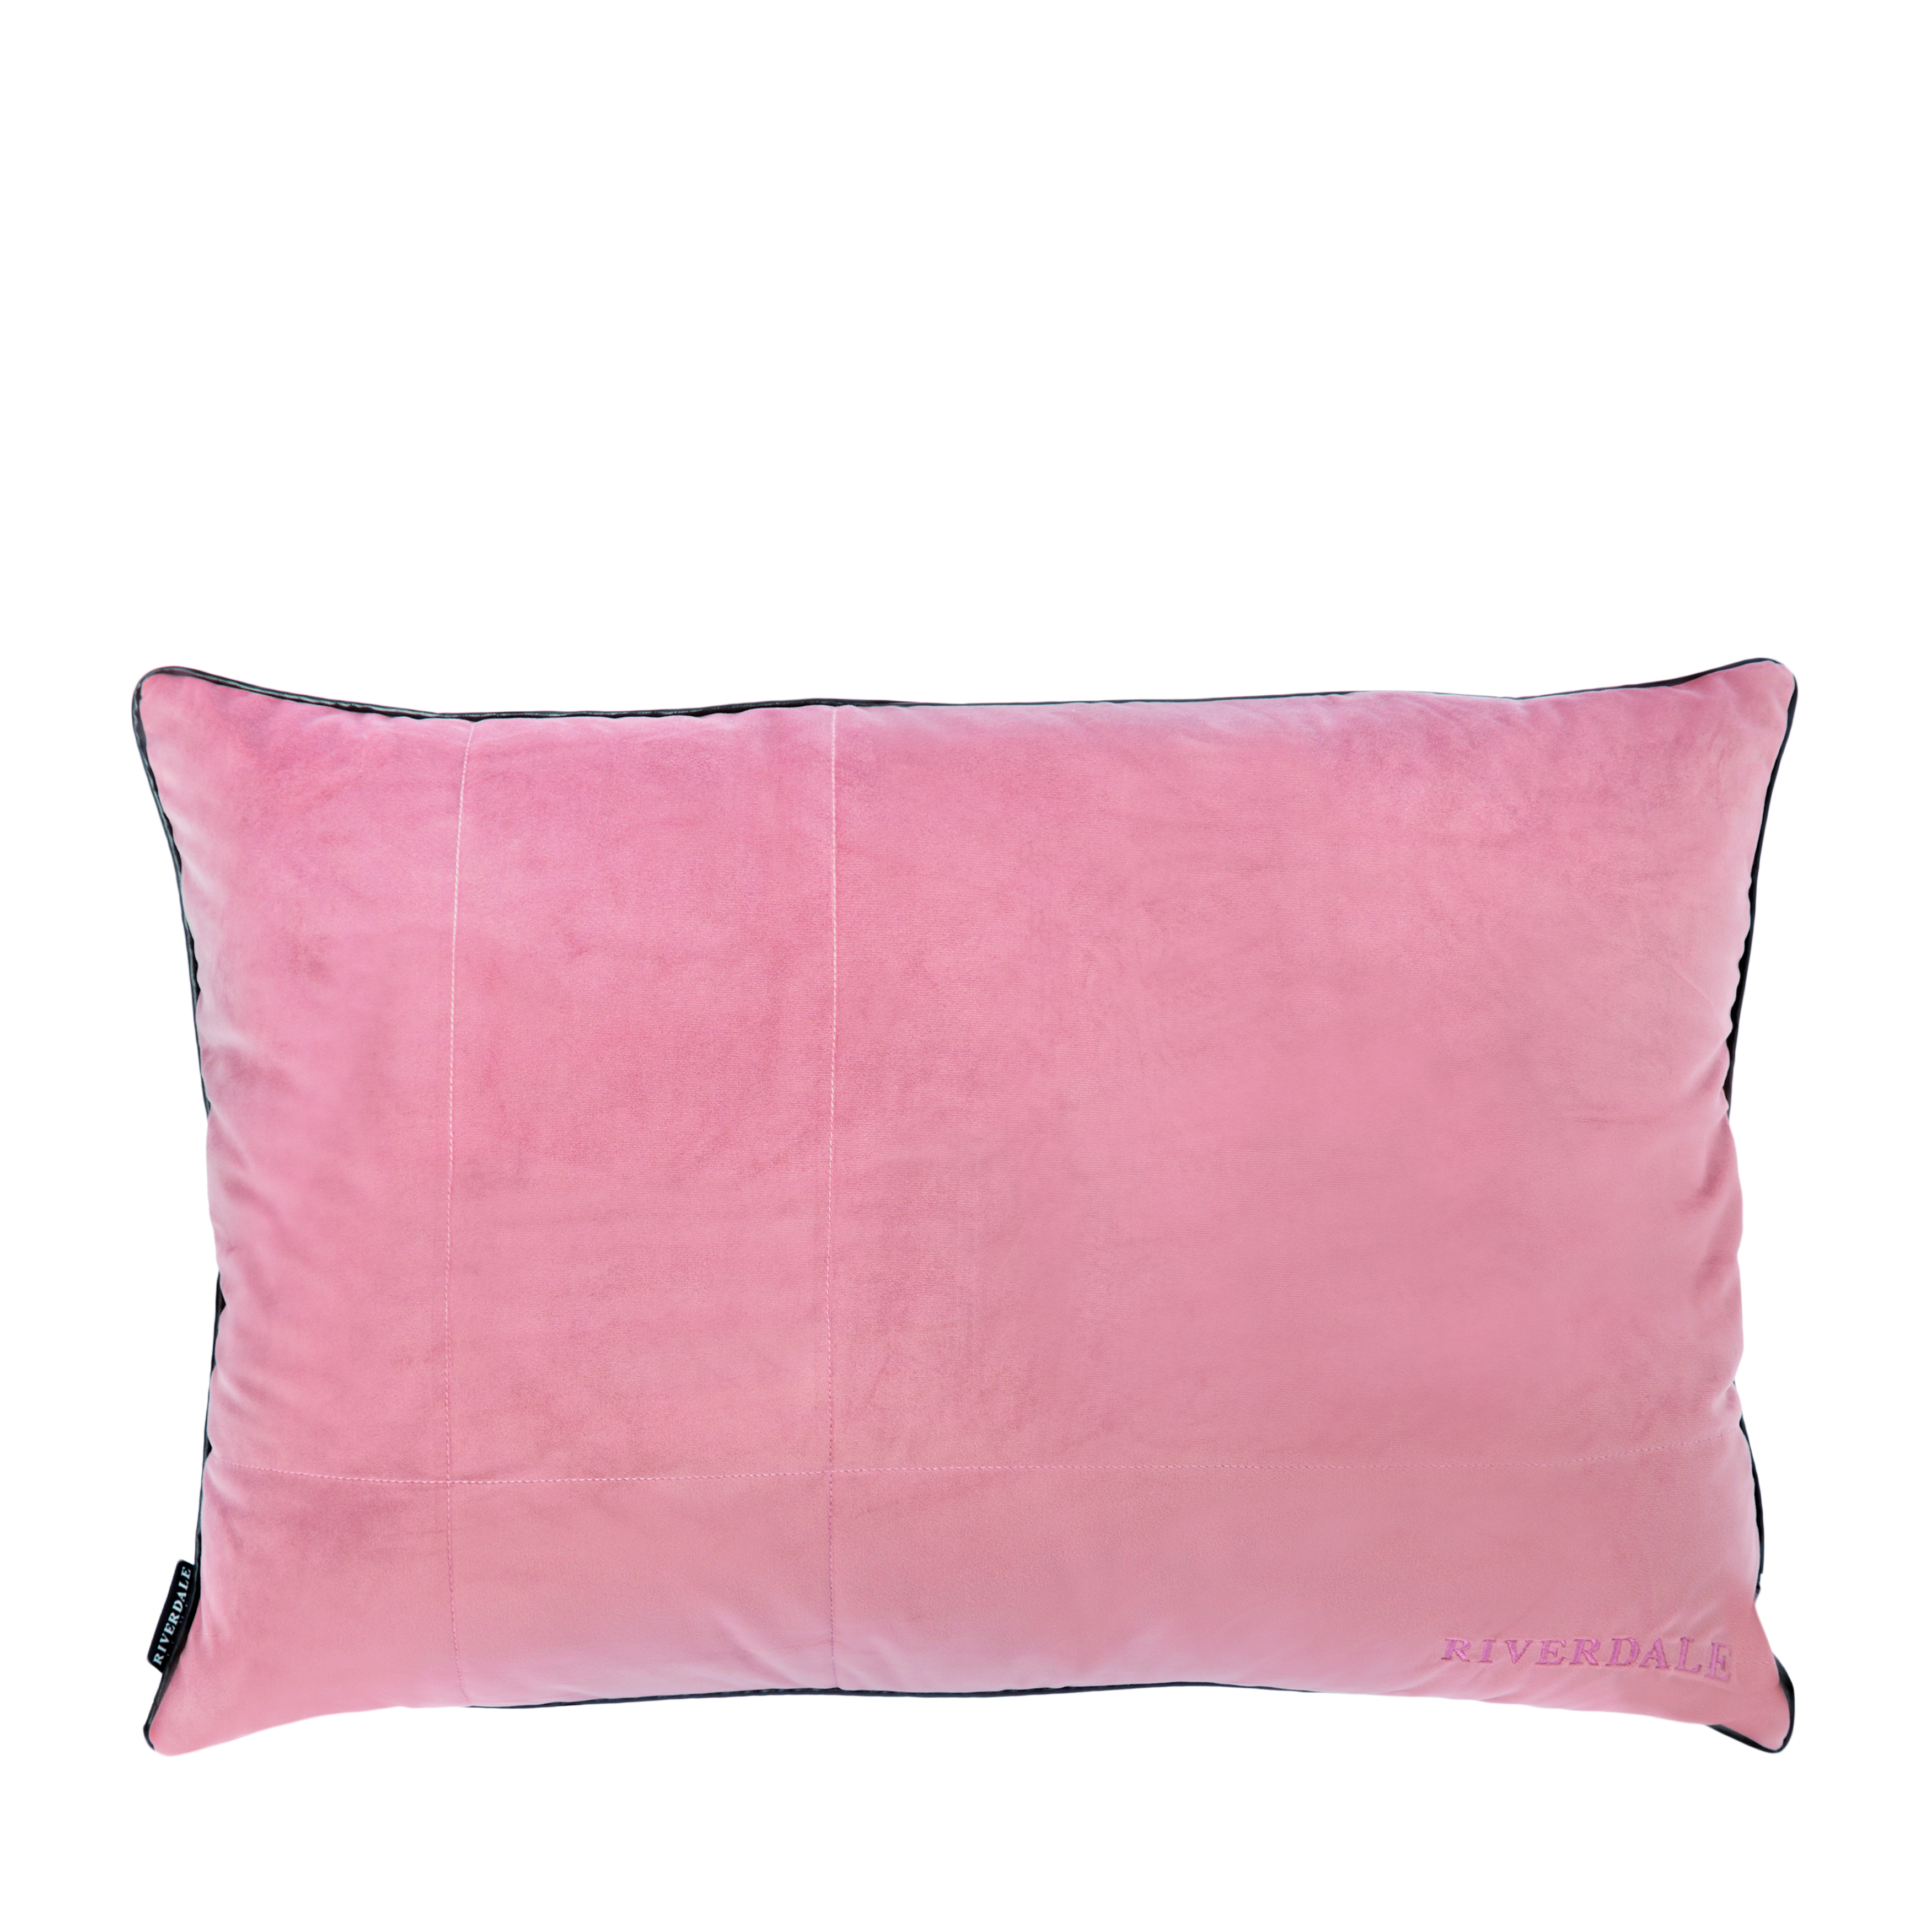 Cushion Hope Old Pink 50x70